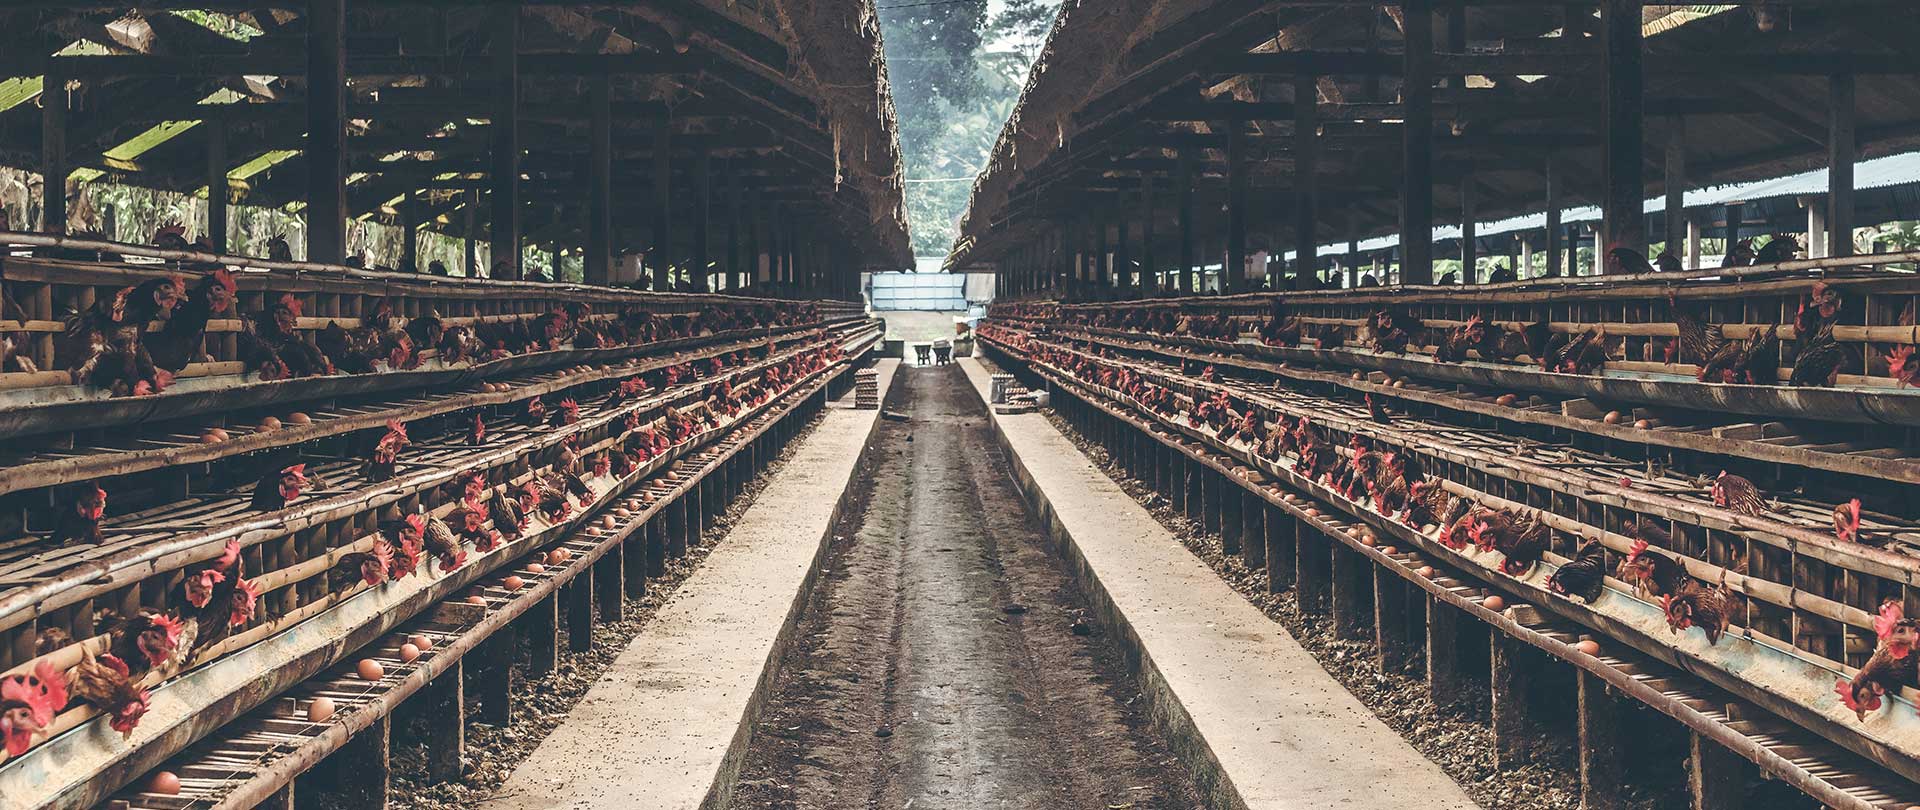 poultry-farming-slider-1